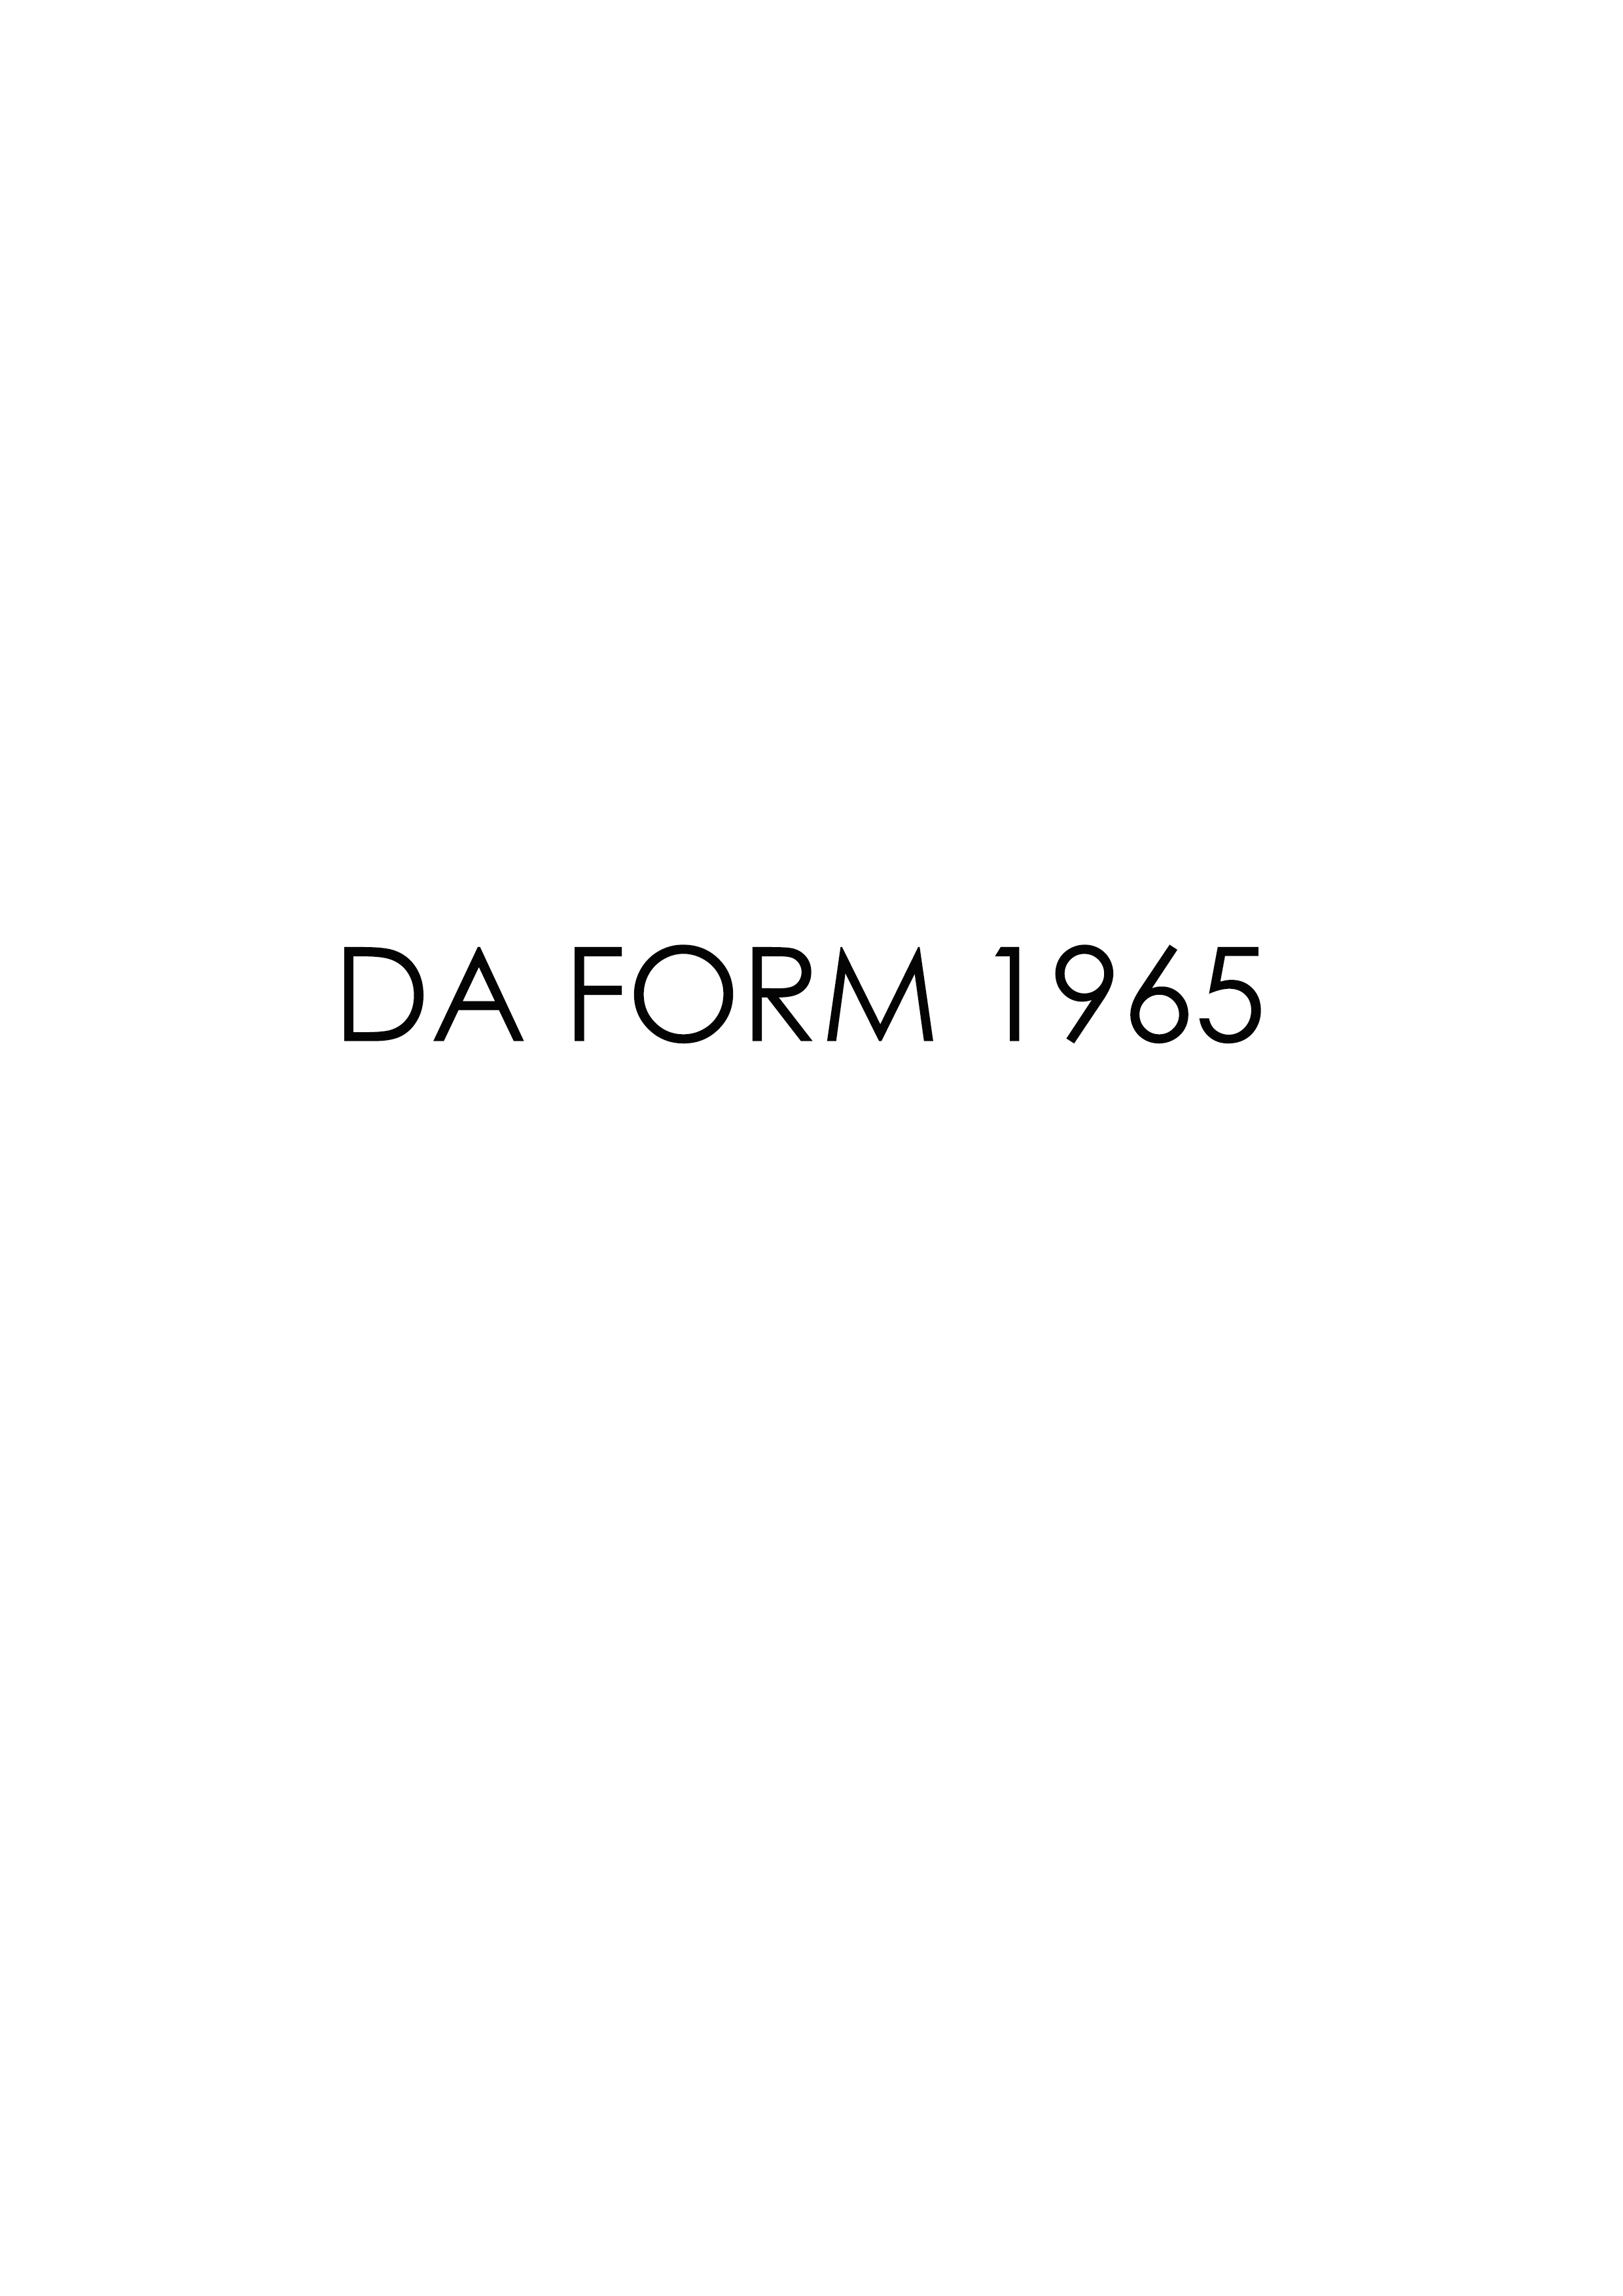 Download da 1965 Form